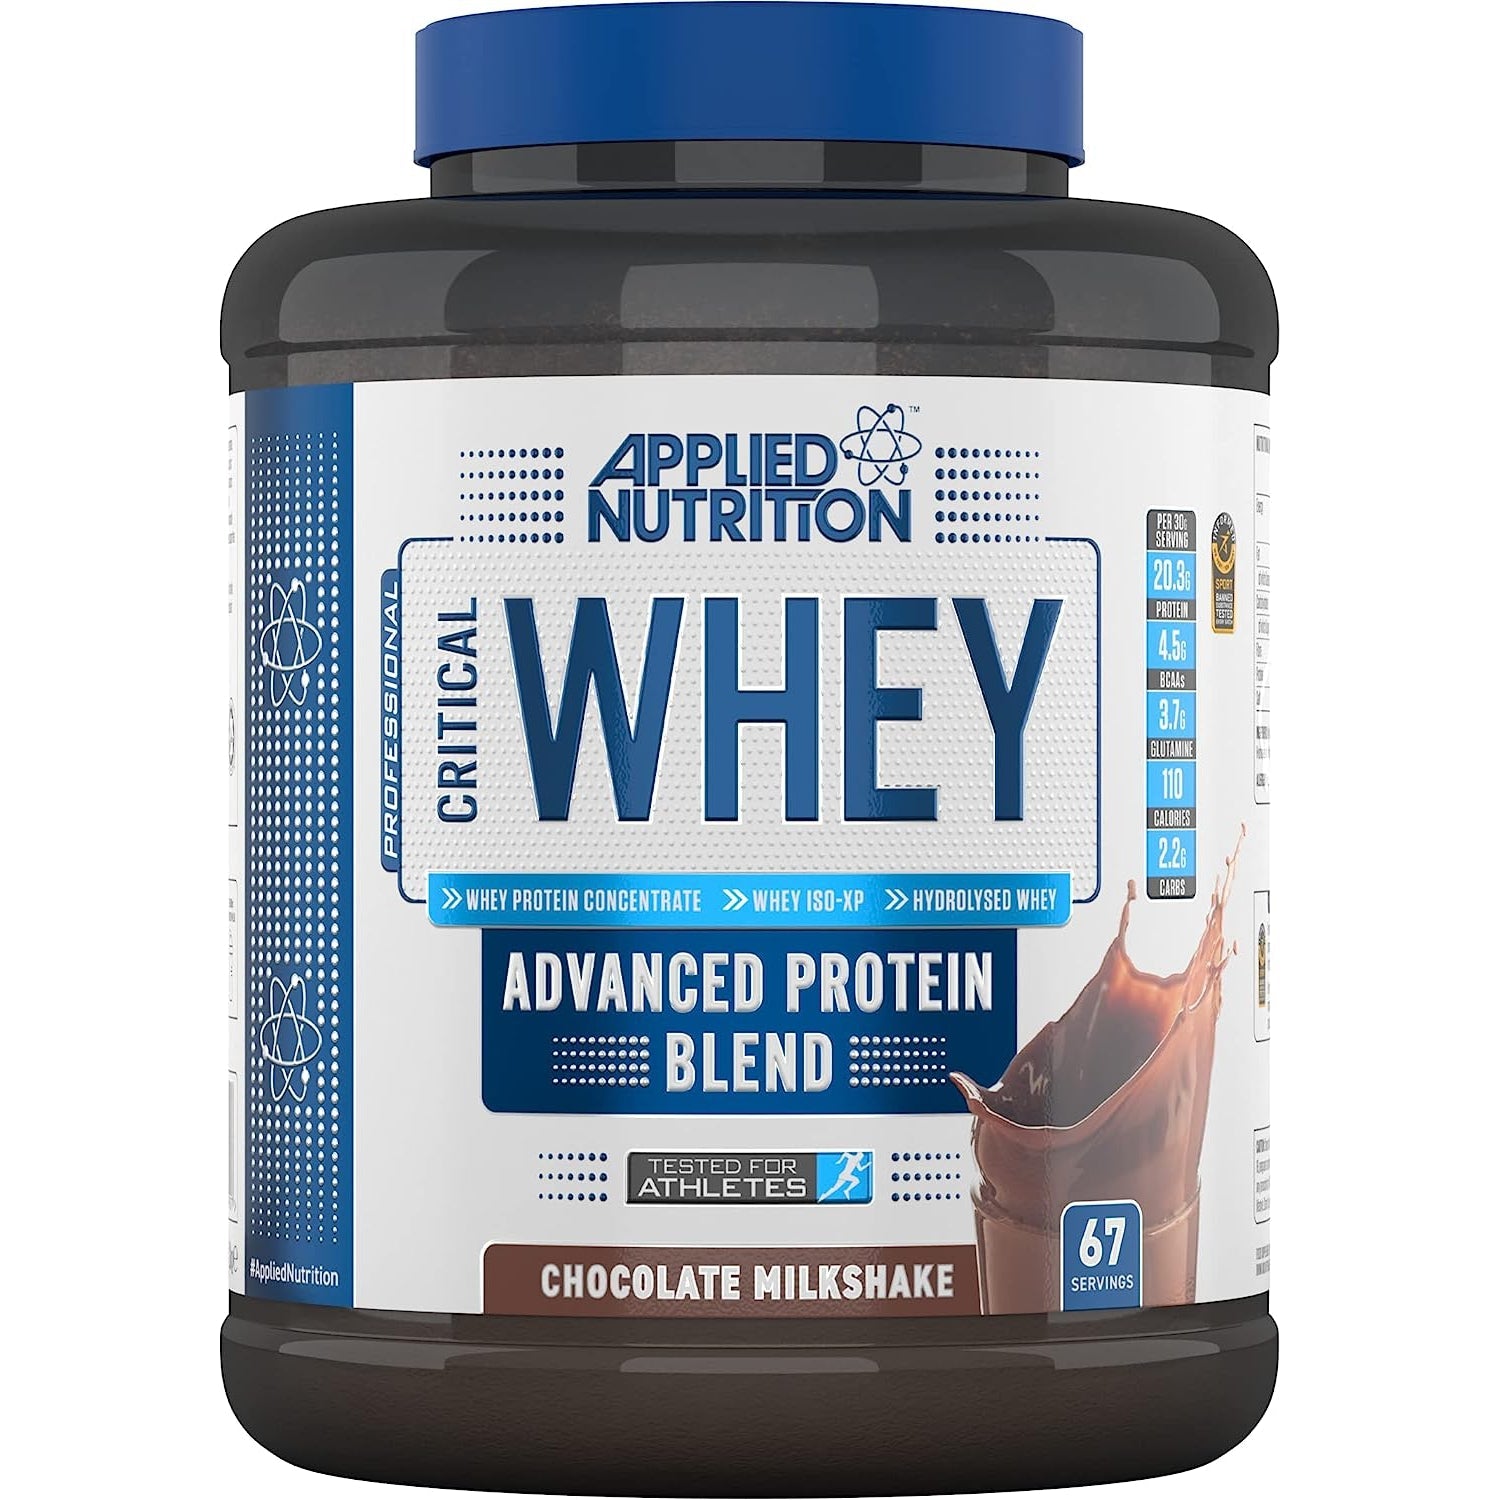 Applied Nutrition Critical Whey Advanced Protein Blend Chocolate Milkshake 21g Protein 2g Carbs 2.27